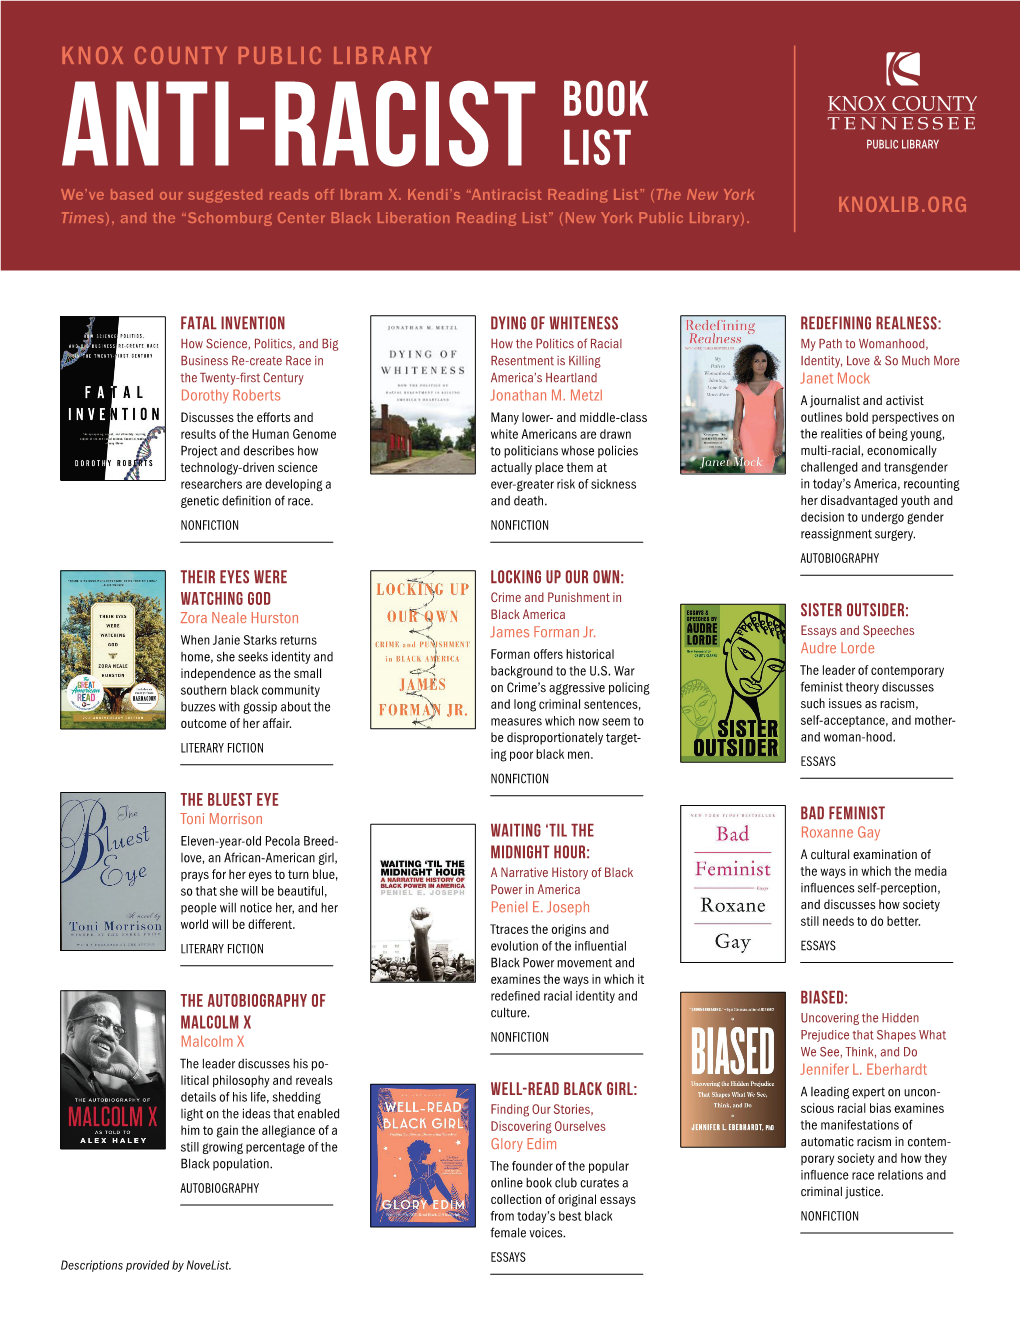 Anti-Racist Book List